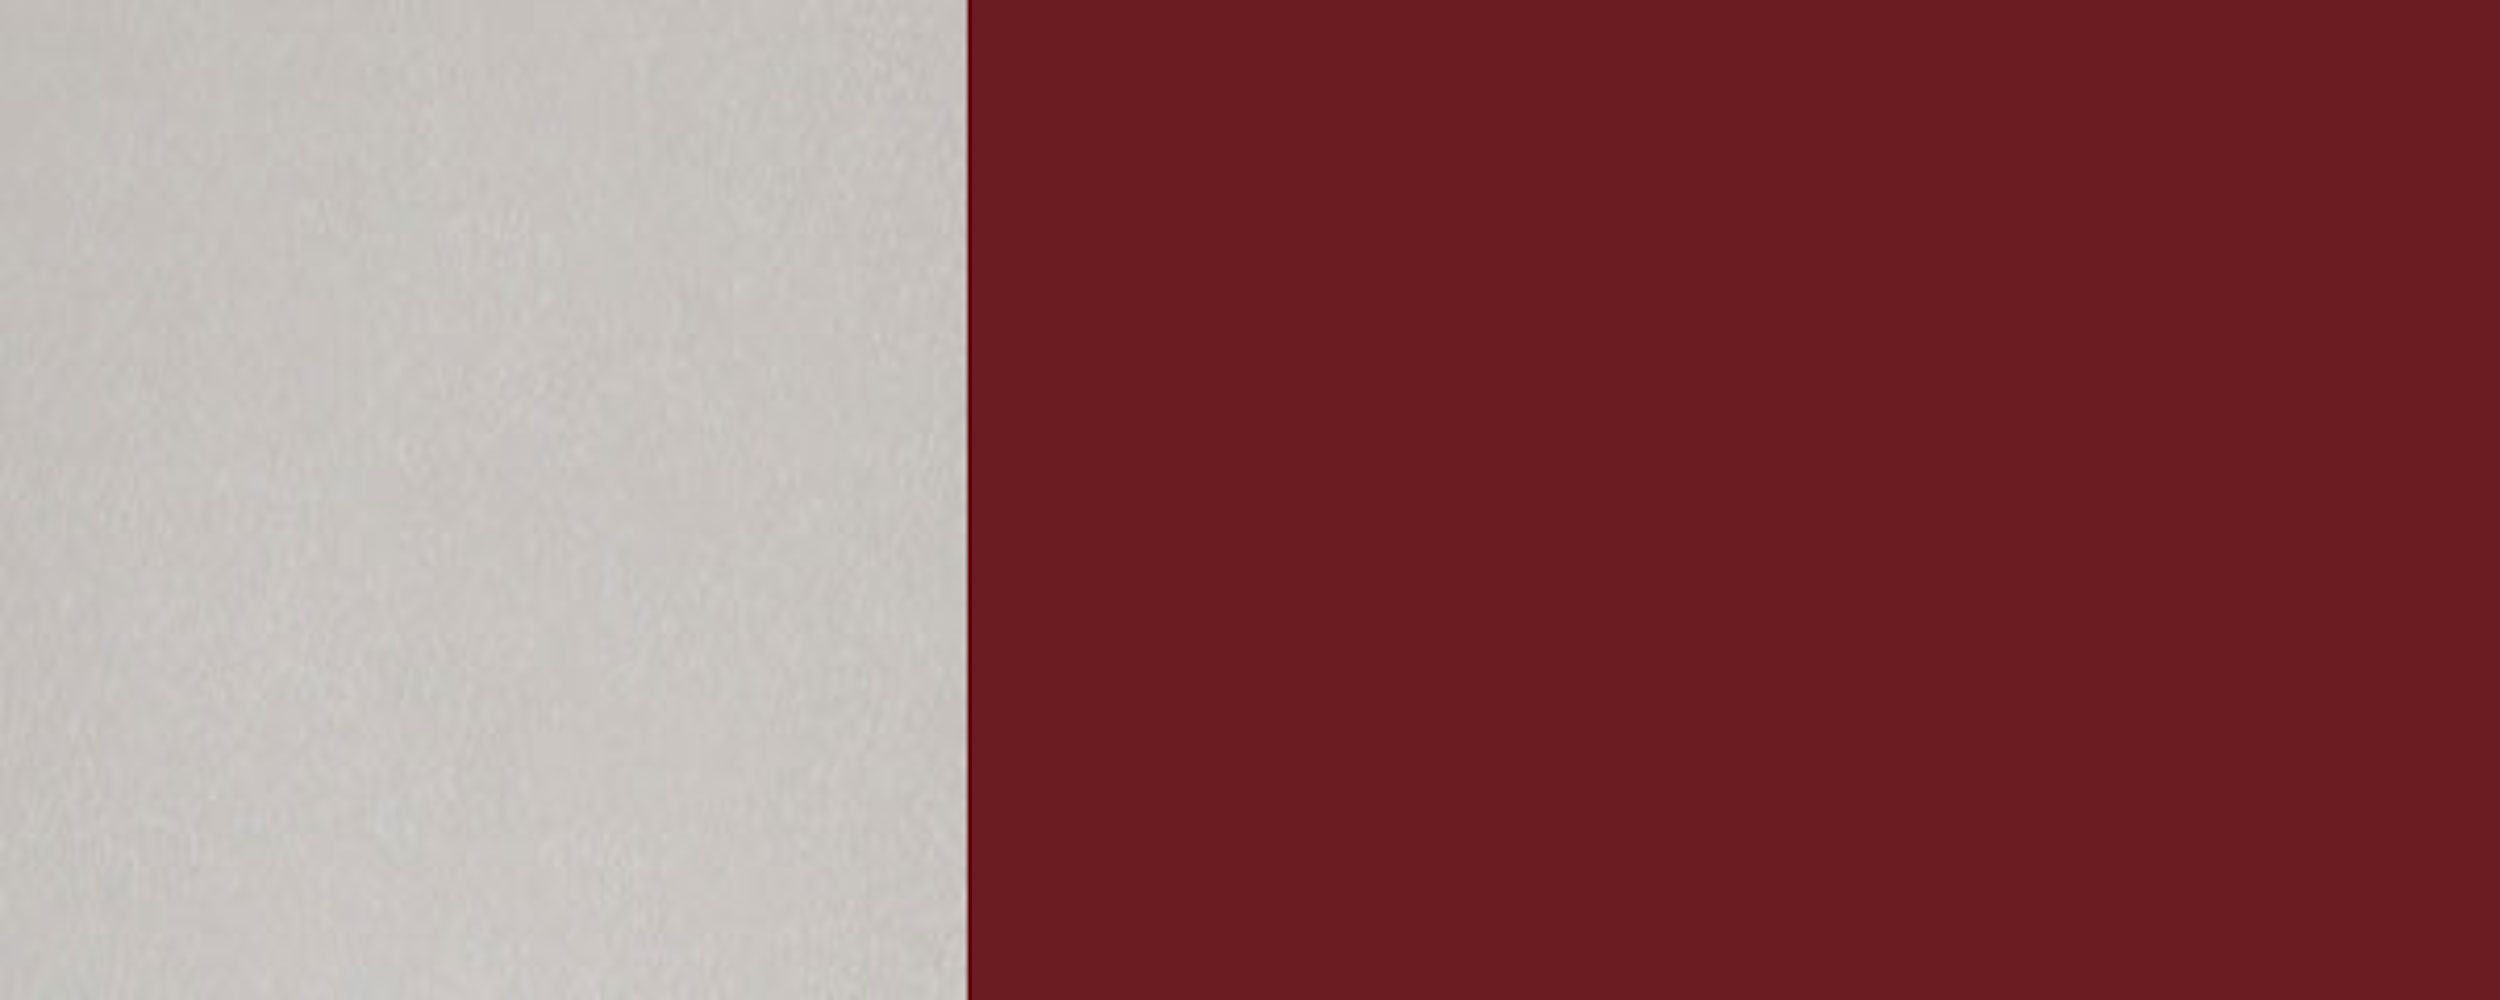 Feldmann-Wohnen Klapphängeschrank Rimini 40cm 3004 Front- und wählbar matt purpurrot Korpusfarbe 1-türig RAL (Rimini)